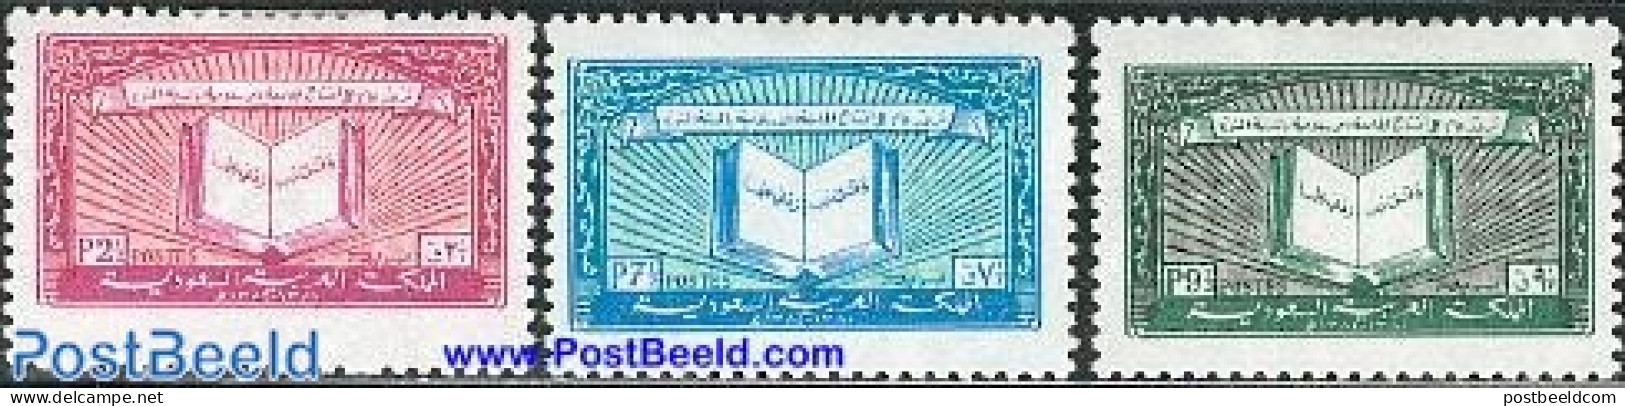 Saudi Arabia 1963 Islamic University Medina 3v, Mint NH, Science - Arabie Saoudite